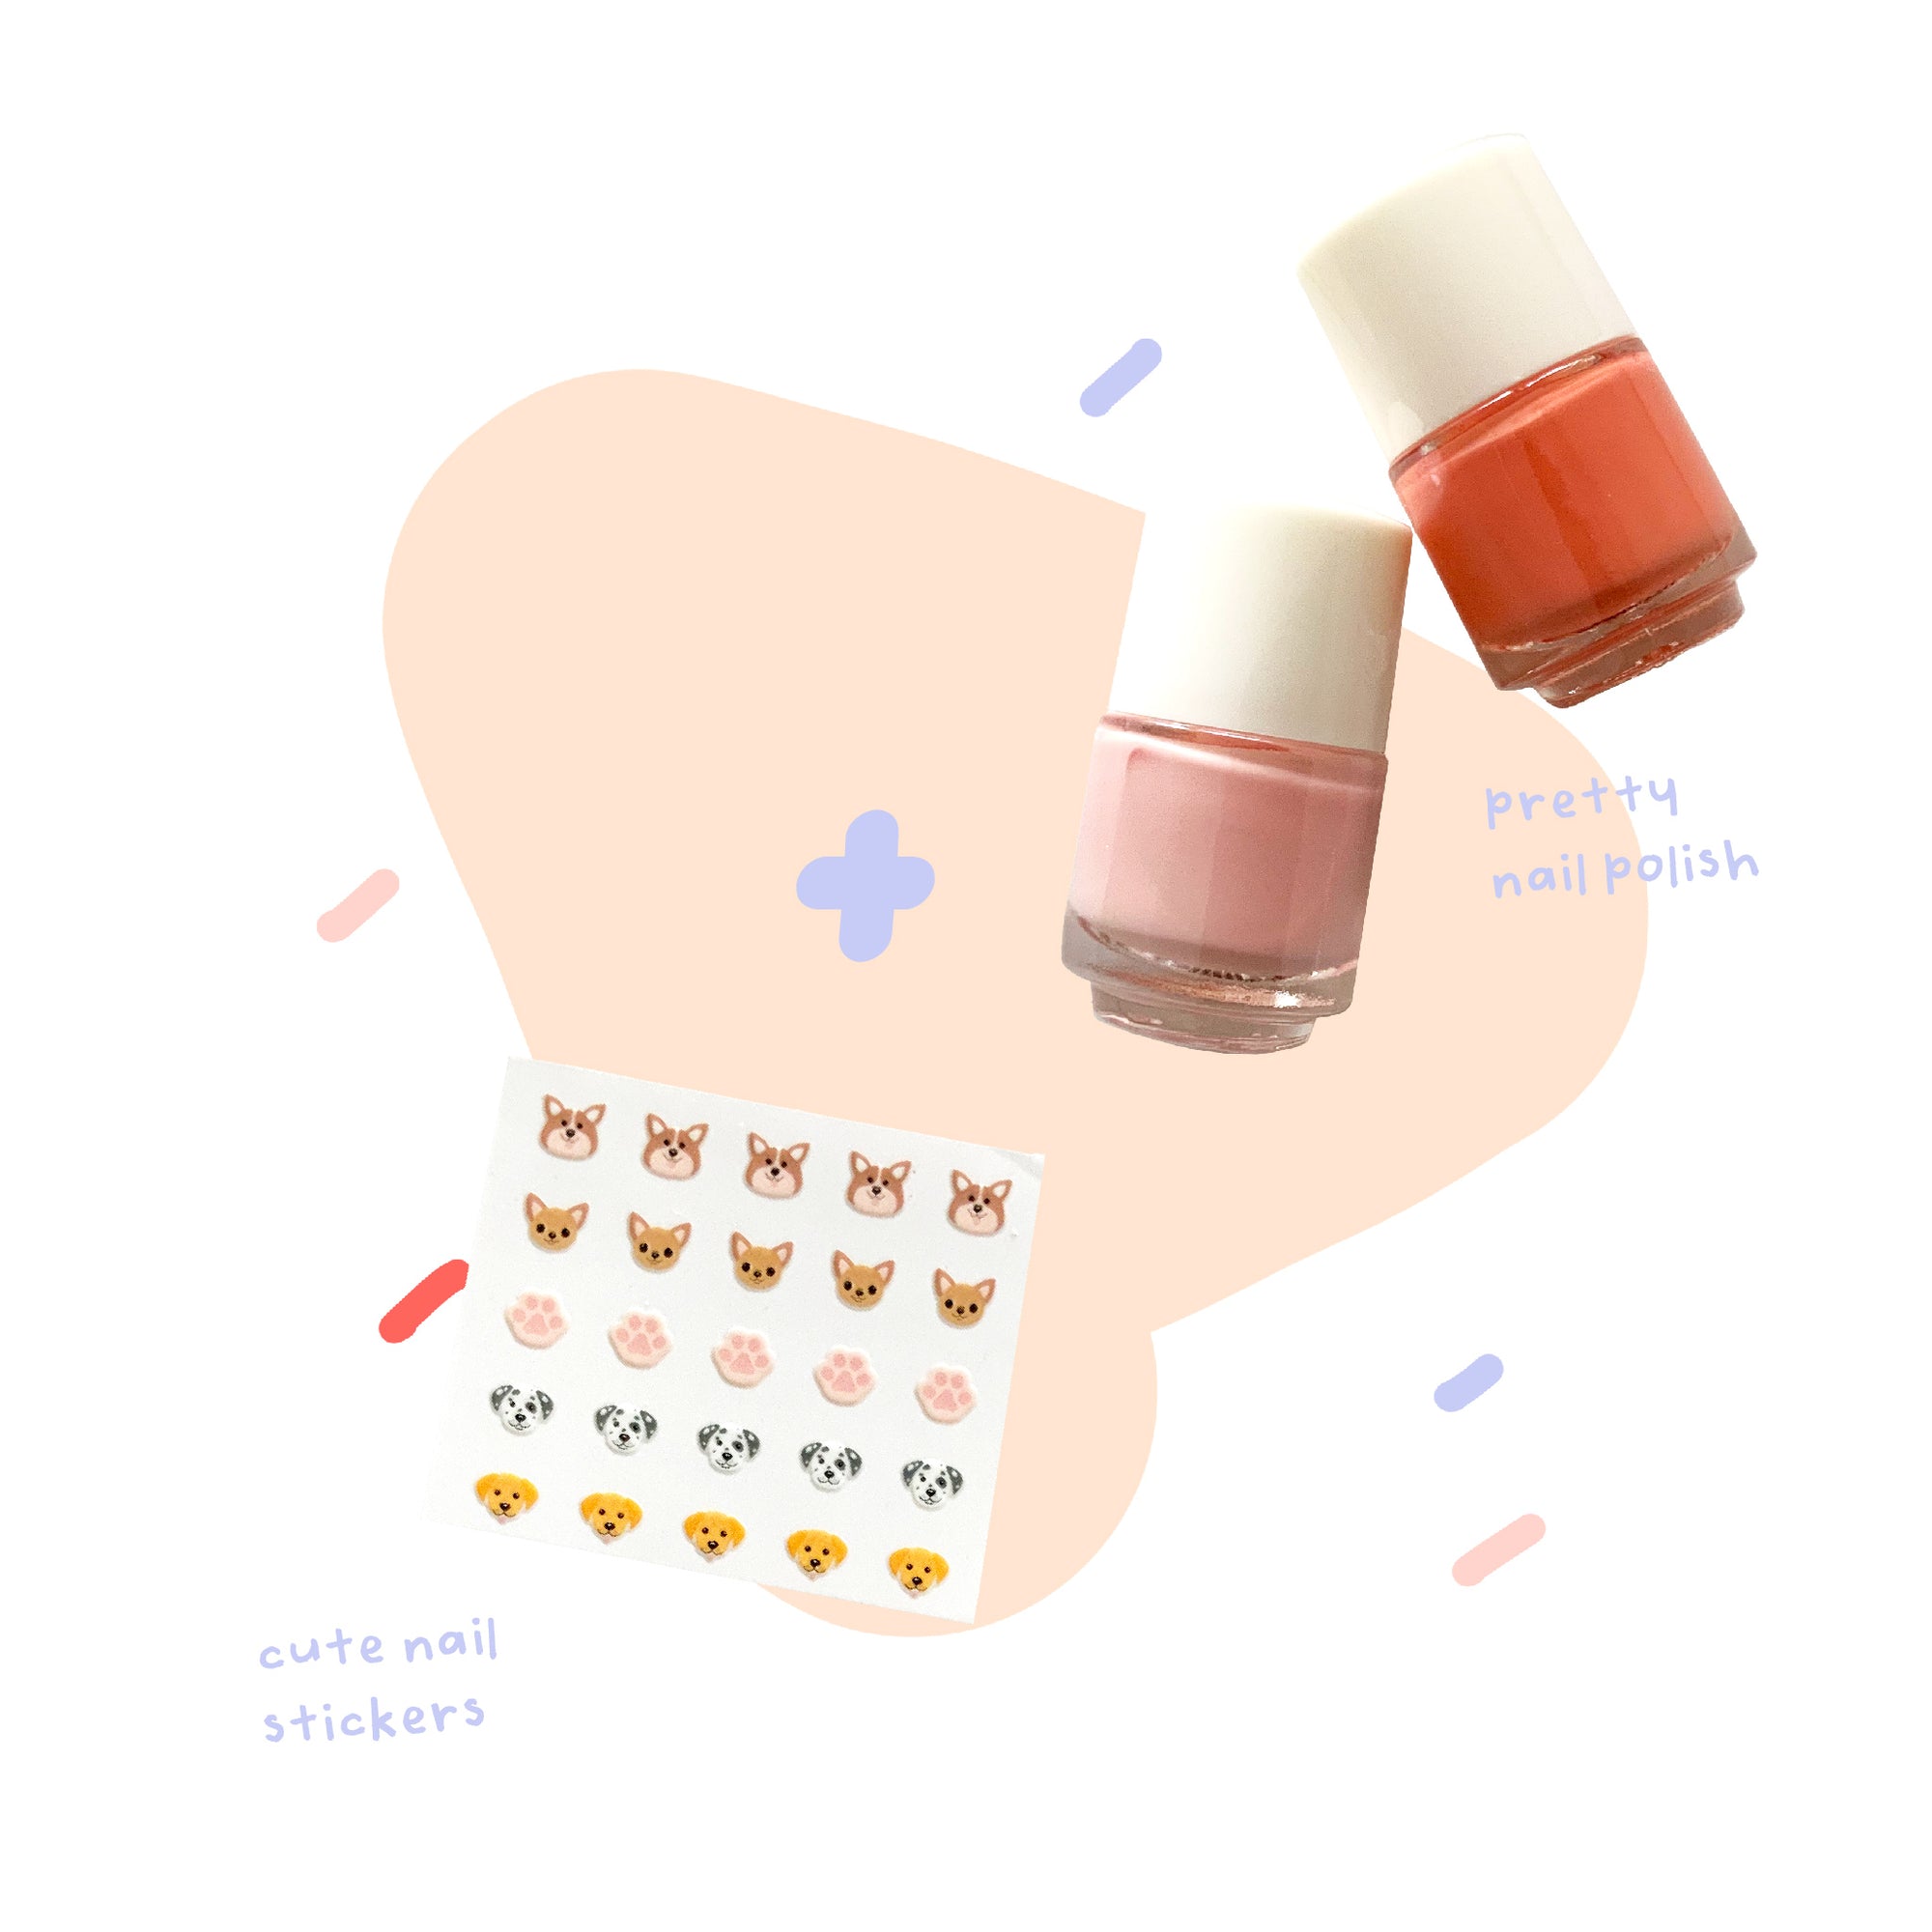 beauty kit - animals nail sticker with pink and punch nail polish